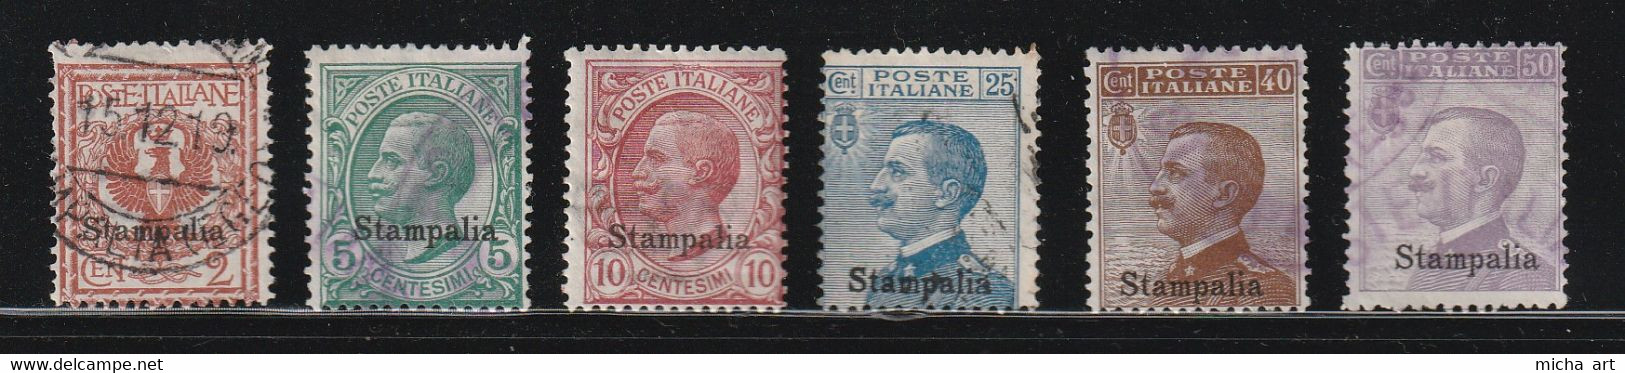 Italian Colonies 1912 Greece Aegean Islands Egeo Stampalia No 1-7 (except 4) Lot Used (B352-25) - Egée (Stampalia)